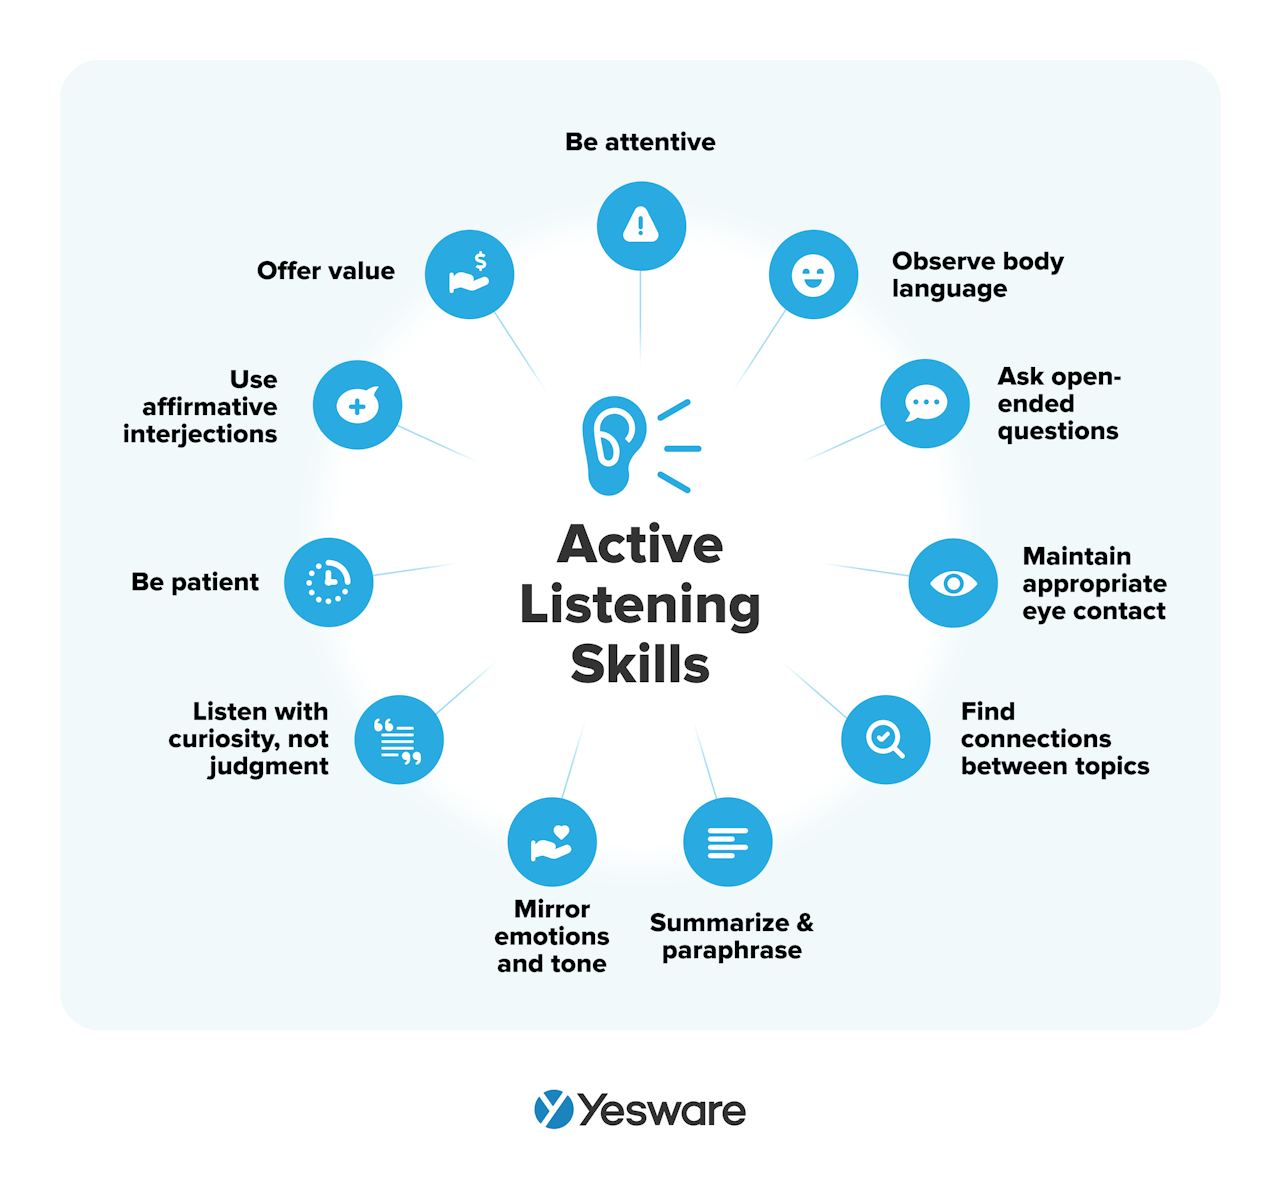 buying motives: active listening skills